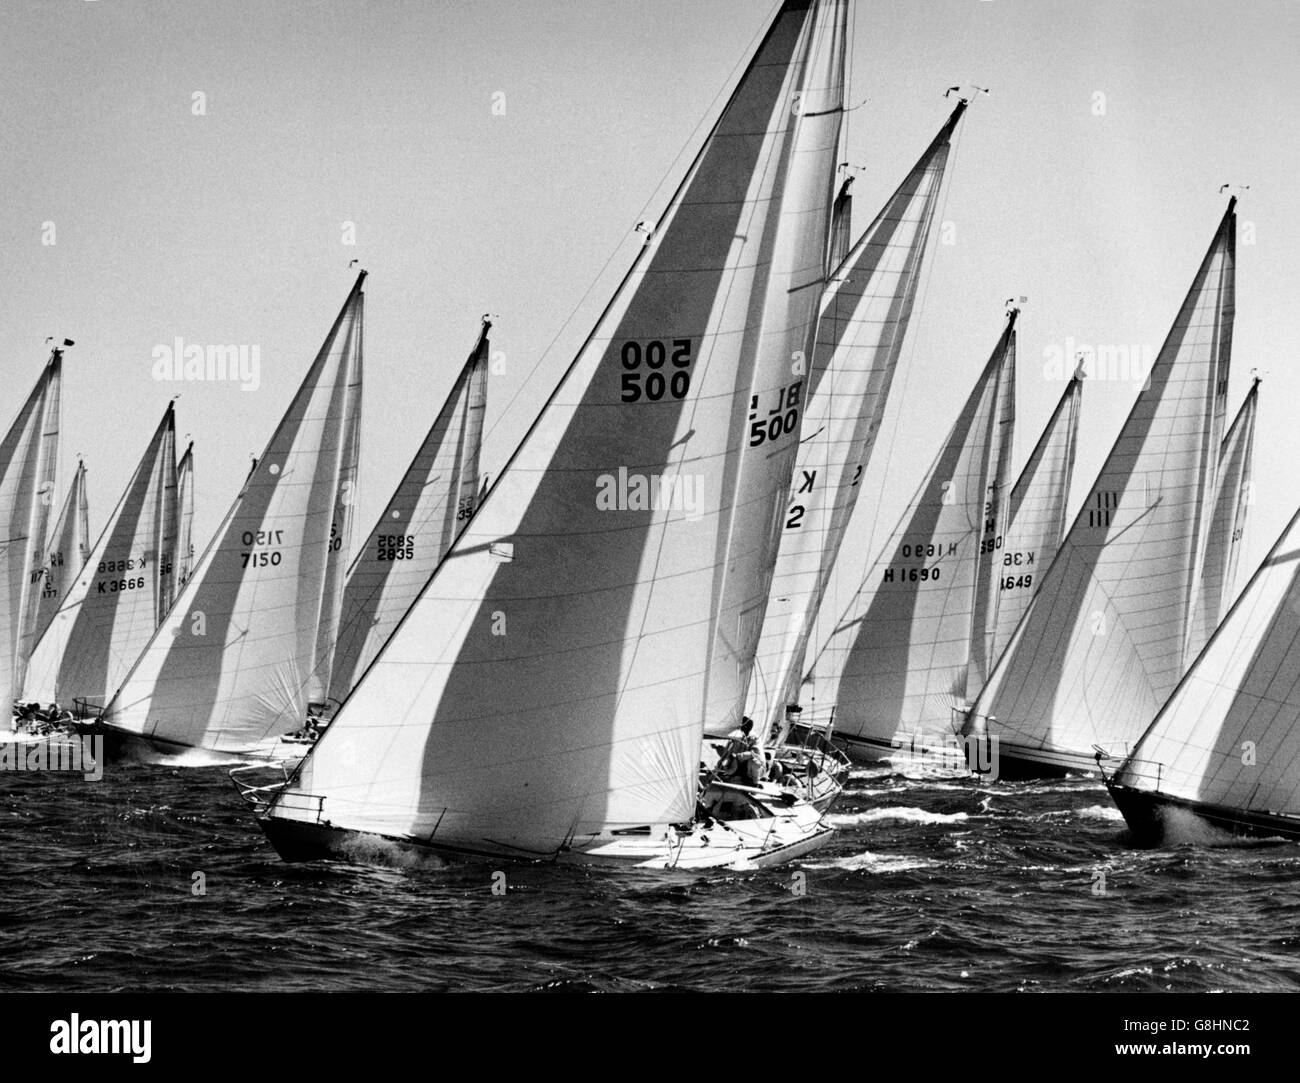 AJAX NEWS PHOTOS. 1974. TORBAY, ENGLAND. - 1 TON CUP FLEET 1974 - START OF THE FIRST RACE IN THE WORLD ONE TON CUP SERIES.  PHOTO:JONATHAN EASTLAND/AJAX  REF:FLEET 74 Stock Photo